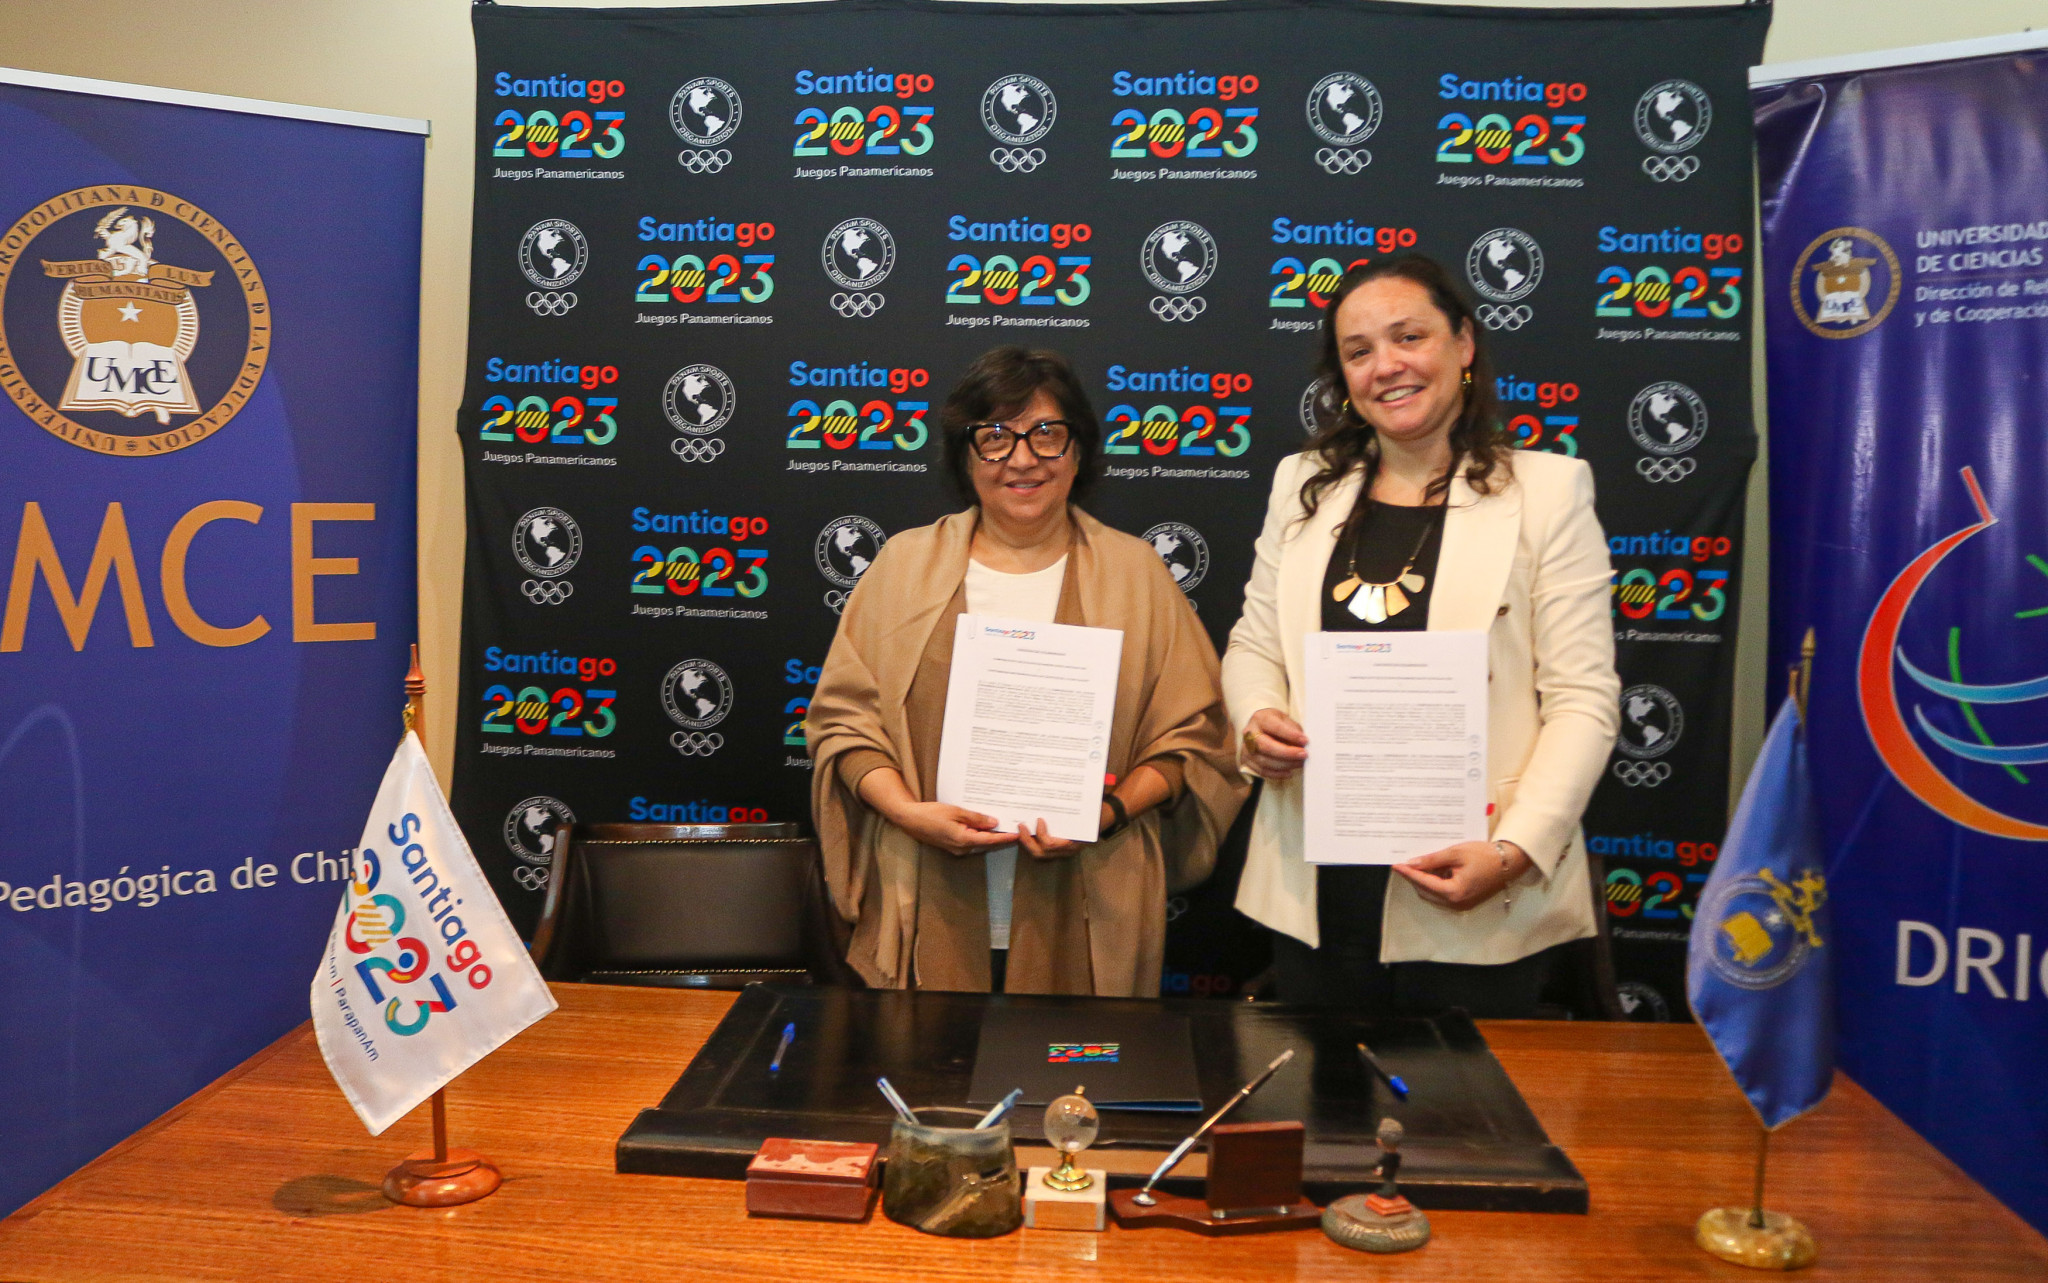 Santiago 2023 and Metropolitan University of Educational Sciences sign volunteering deal